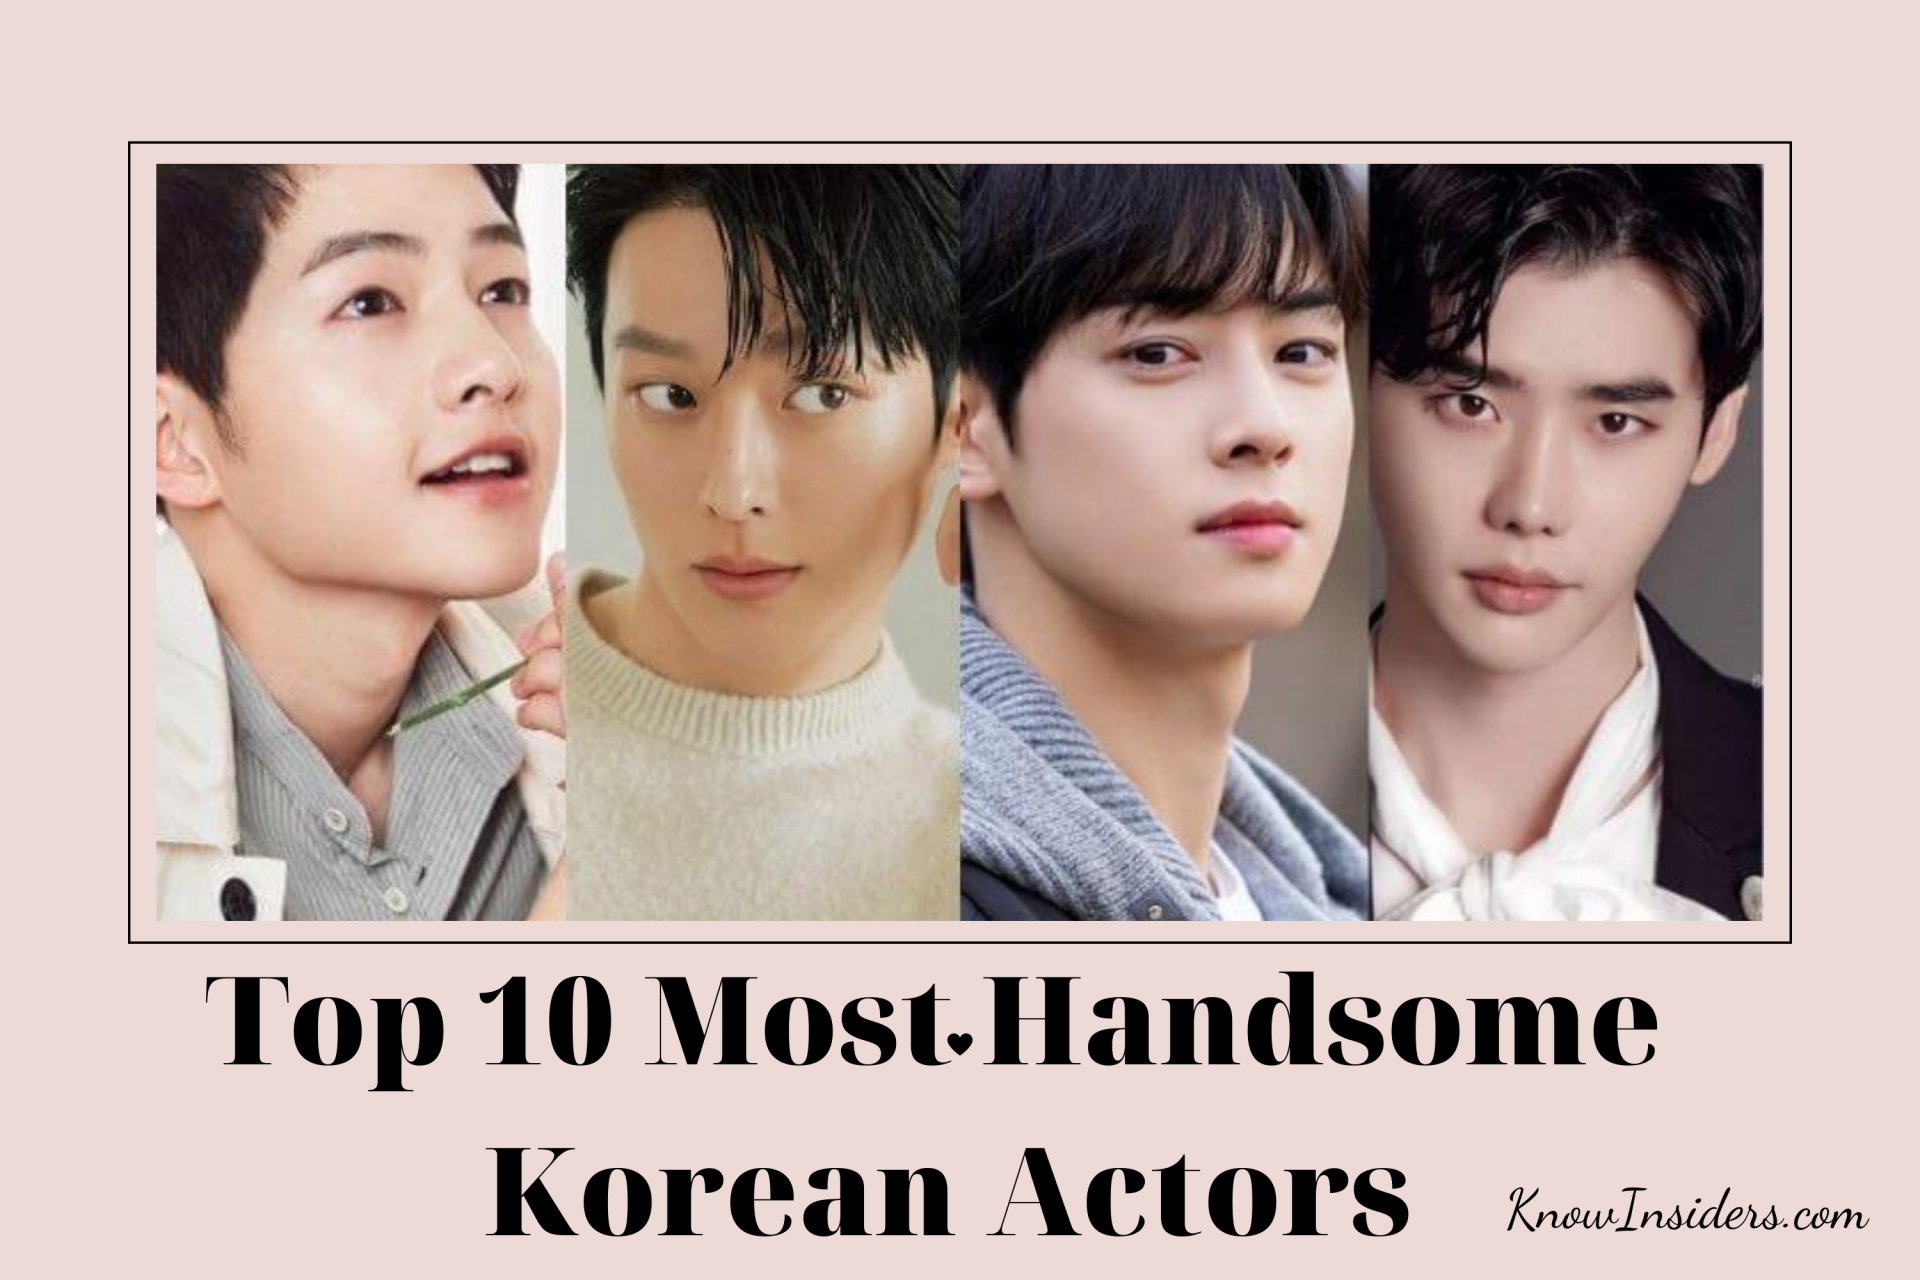 Top 10 Most Handome Korean Actors